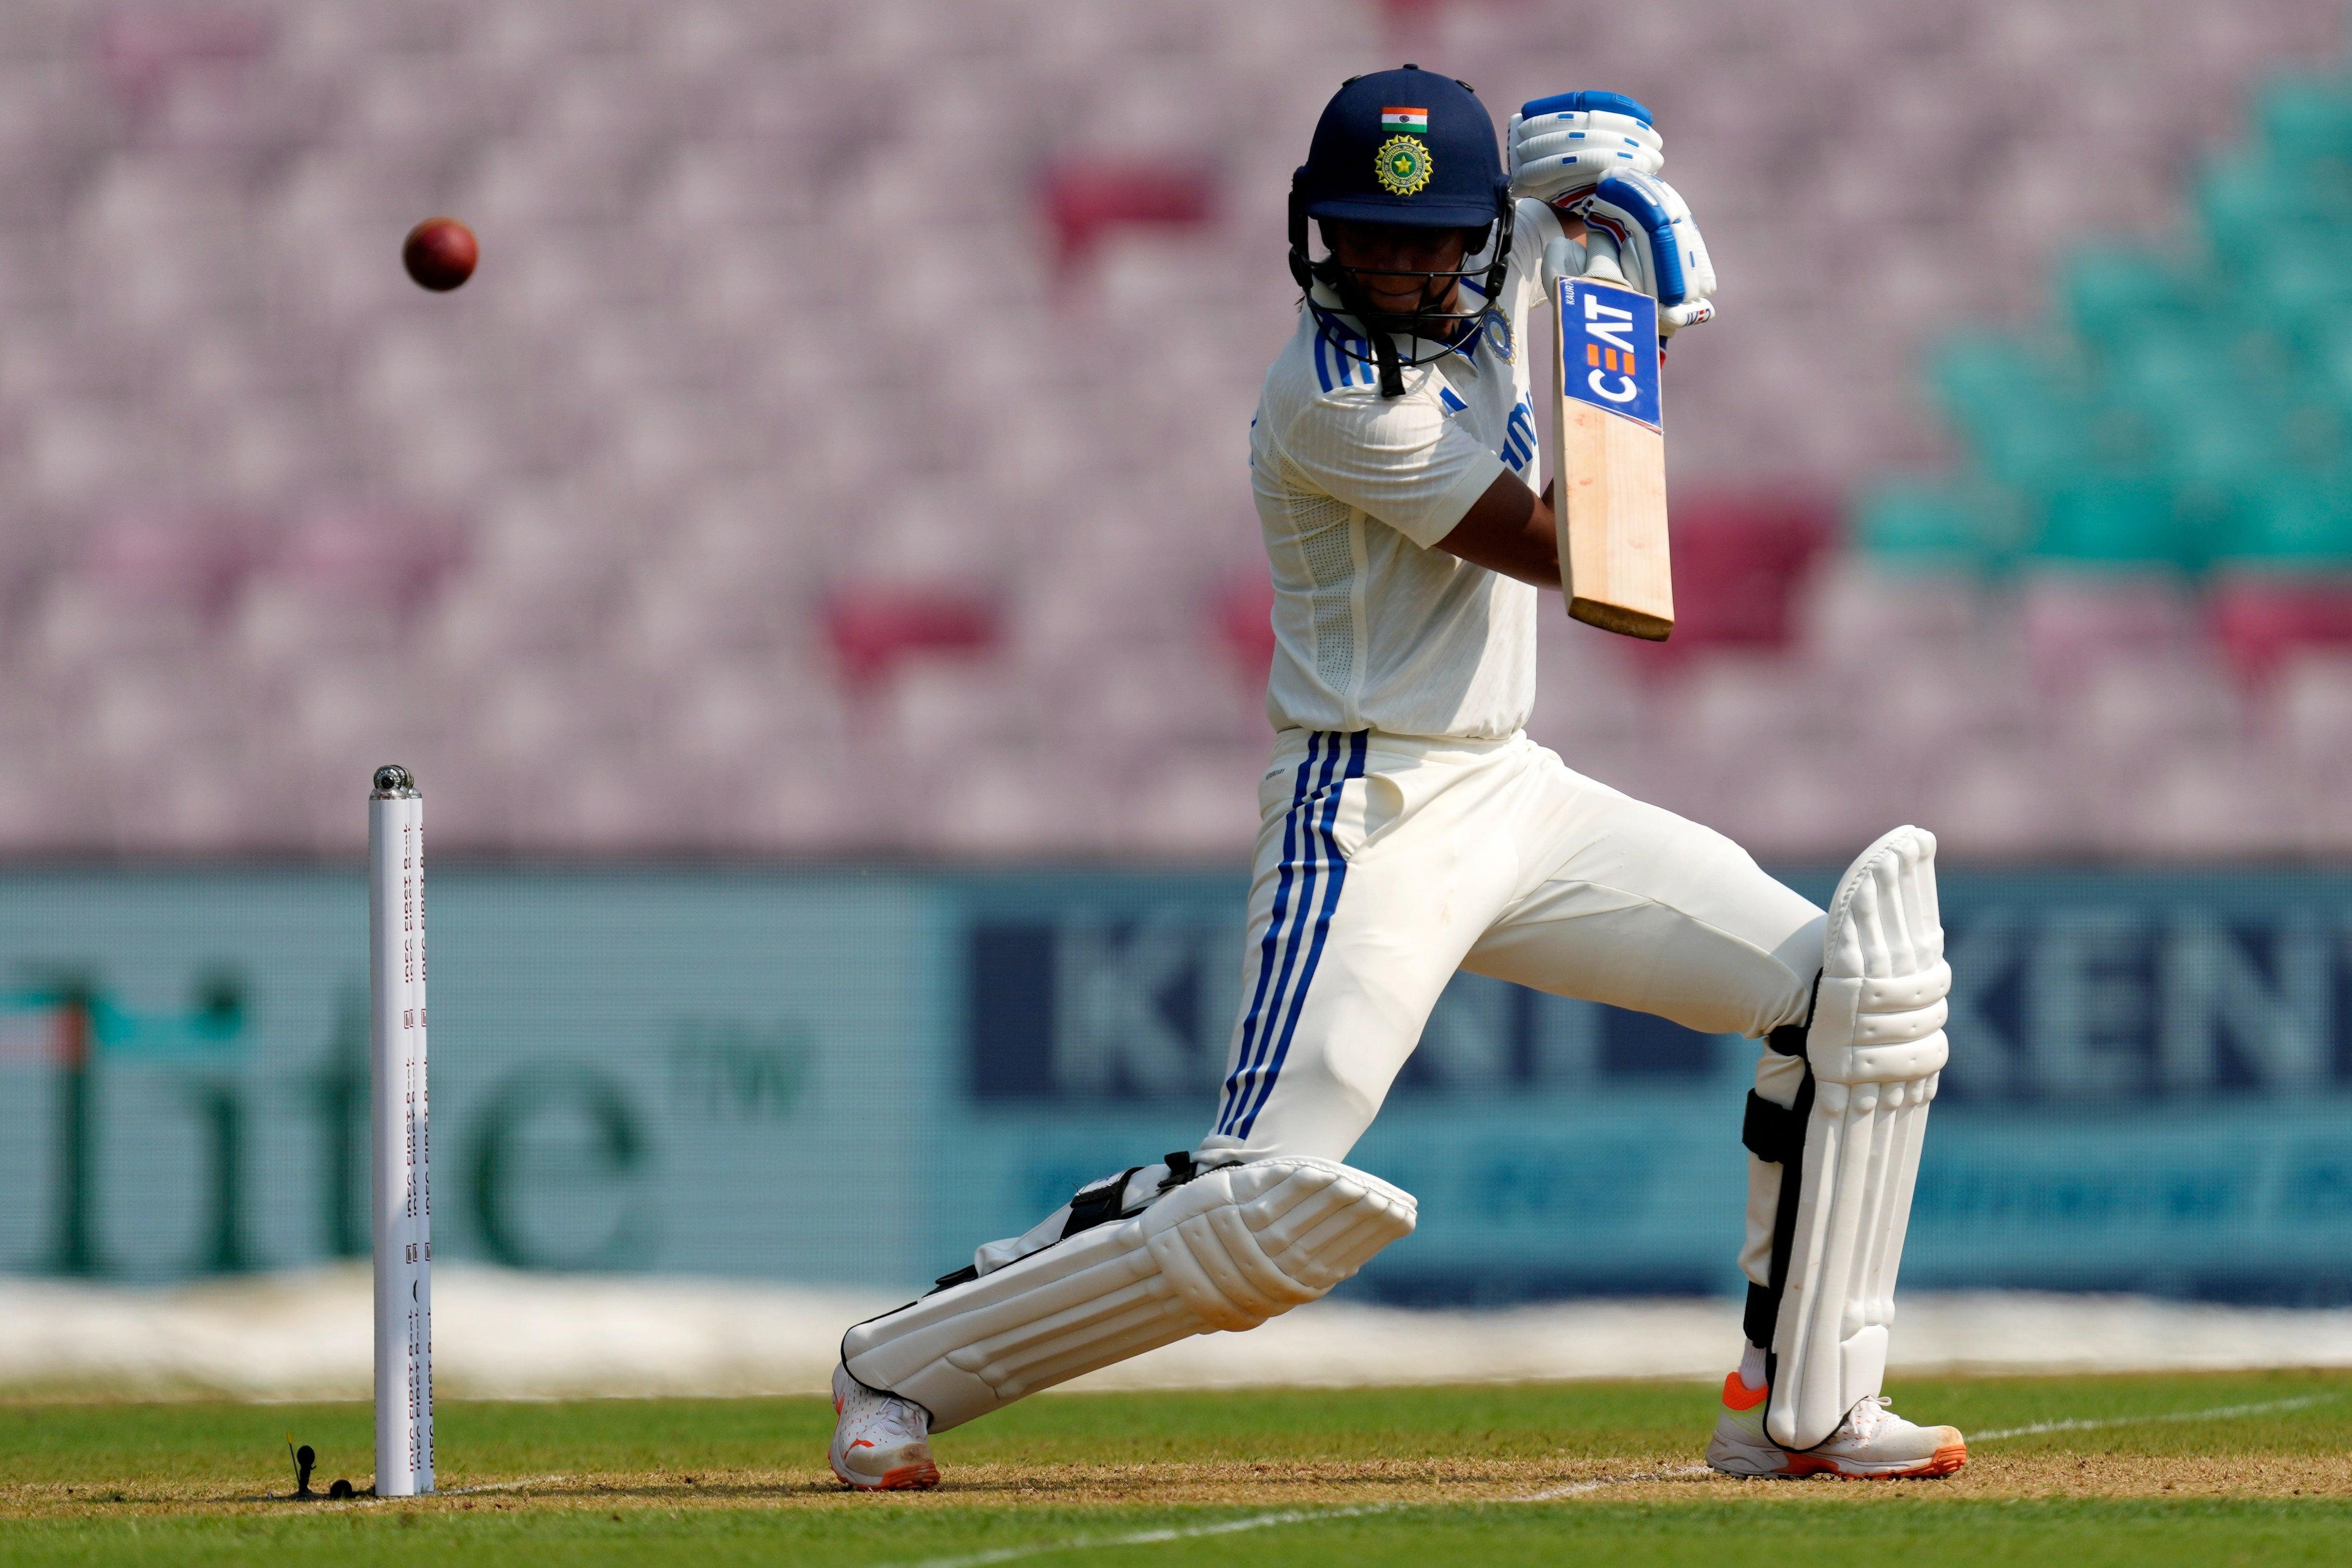 India skipper Harmanpreet Kaur endured a bizarre runout after a solid innings in Mumbai